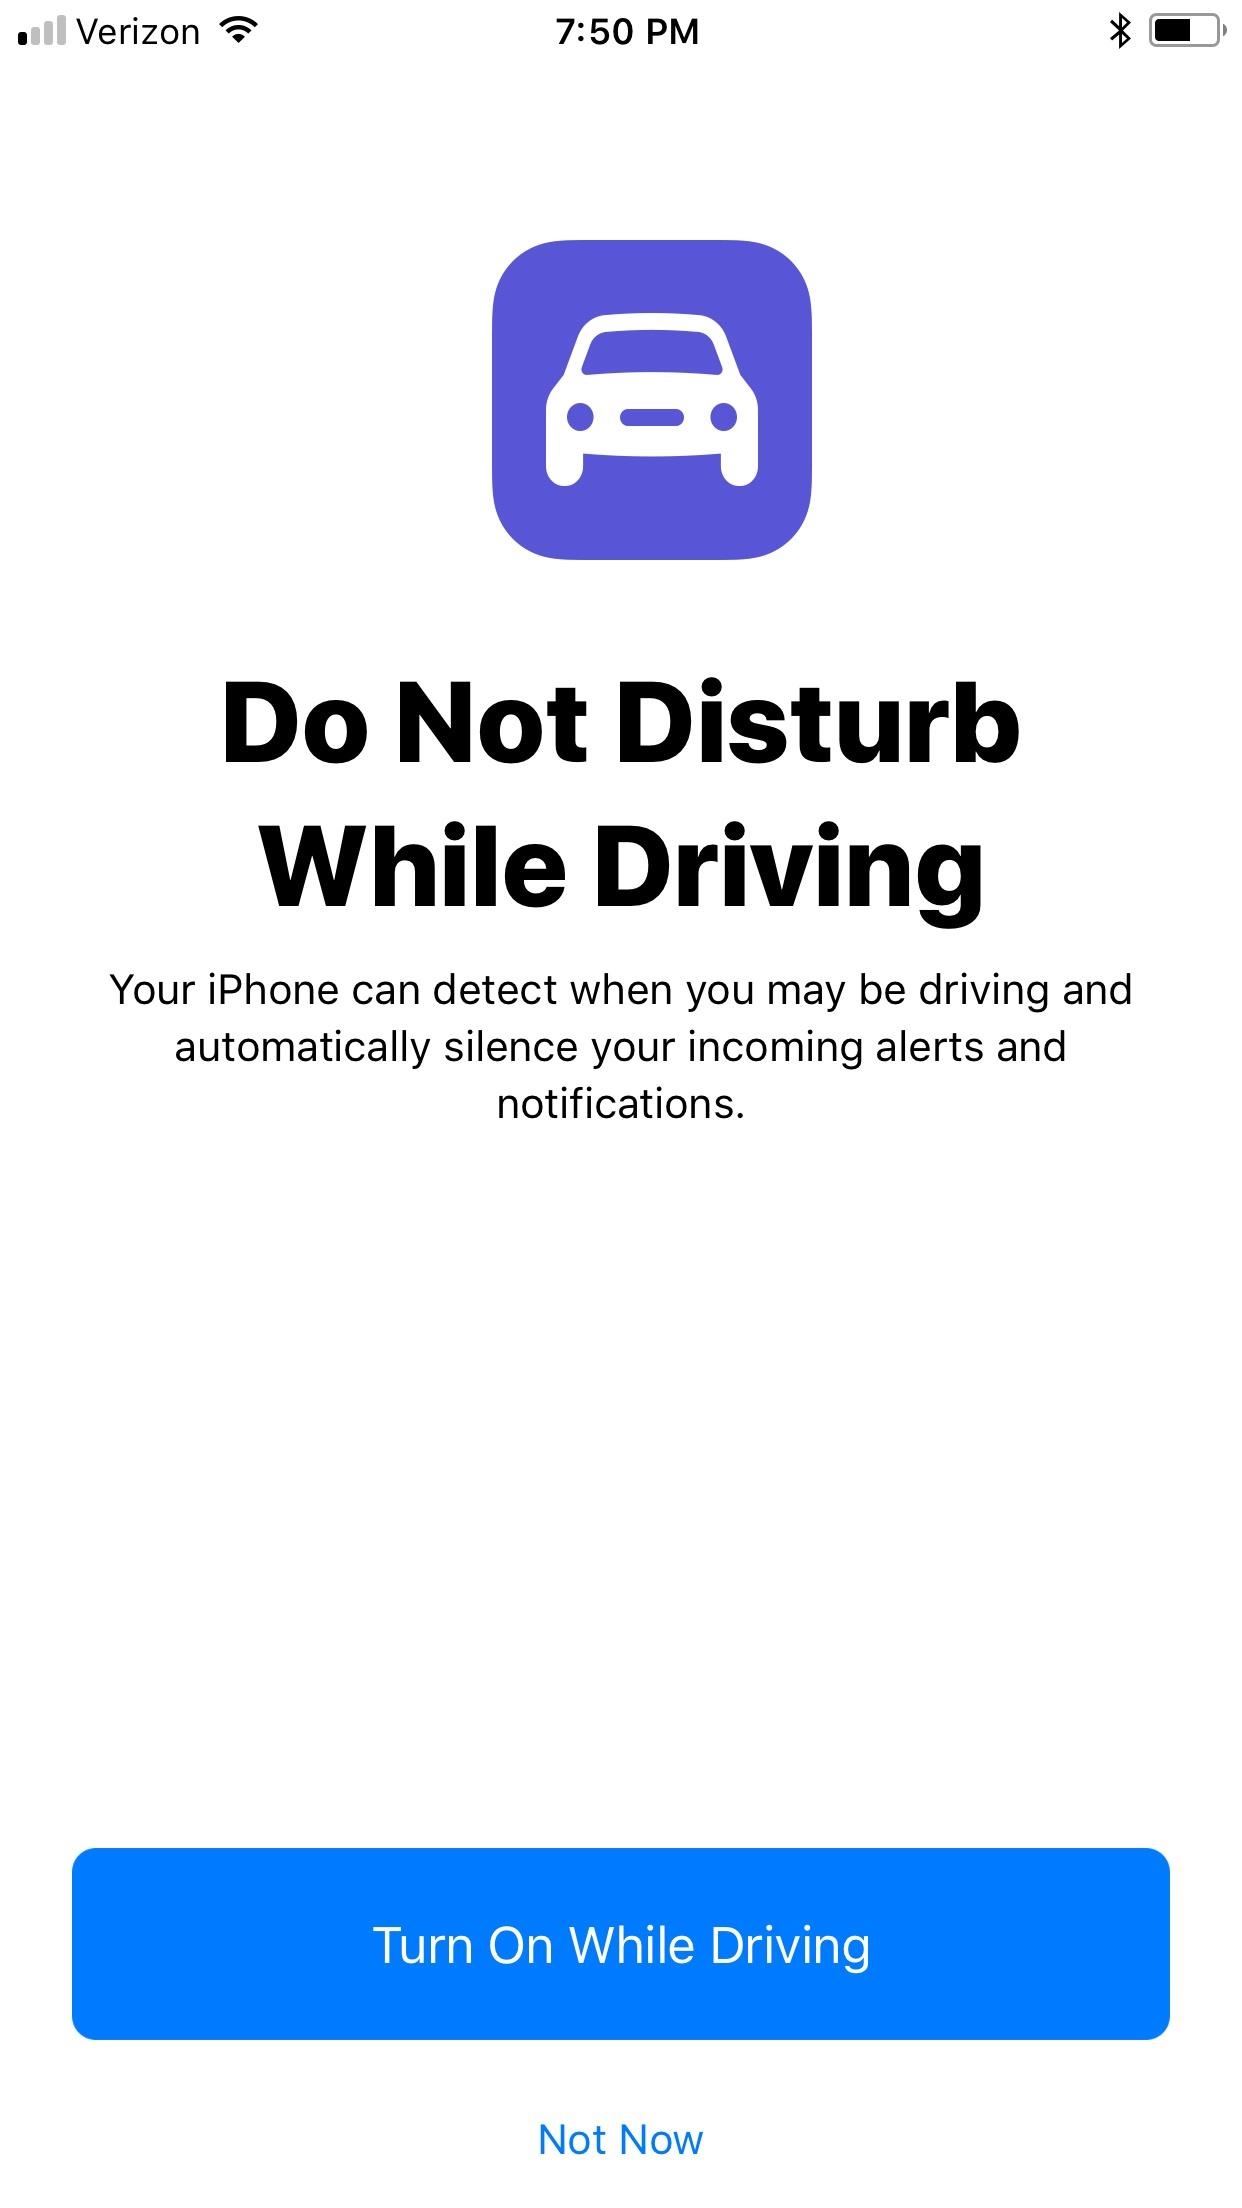 Do Not Disturb Iphone Wallpapers